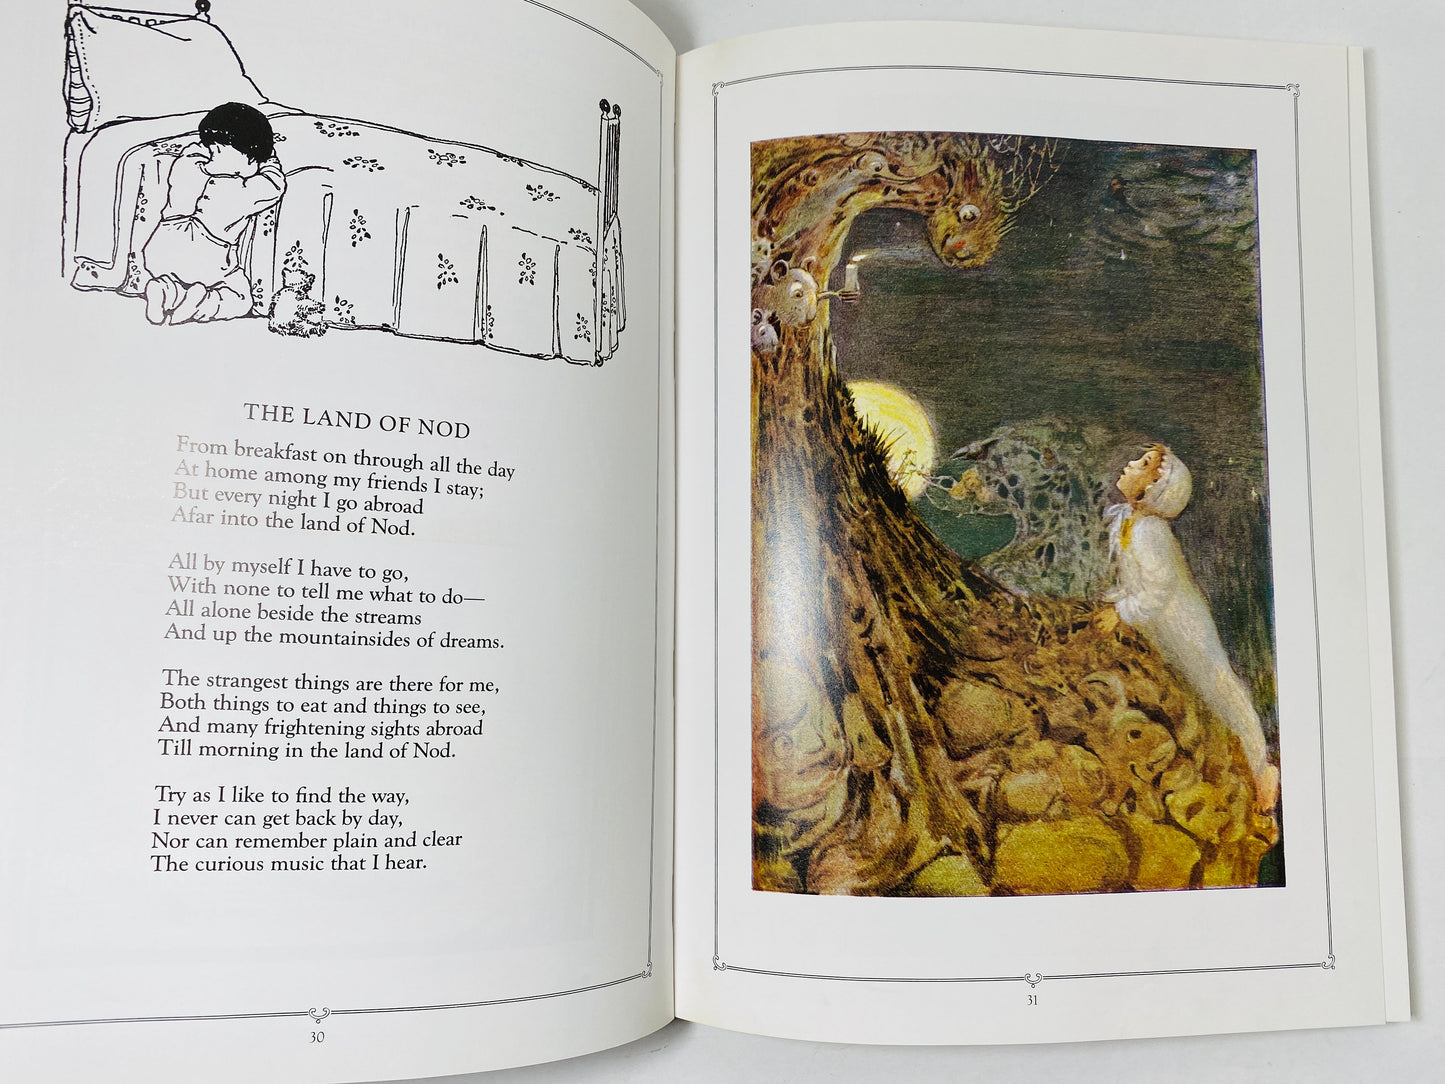 Child's Garden of Verses by Robert Louis Stevenson collected by Cooper Edens Vintage Children's book. Nursery